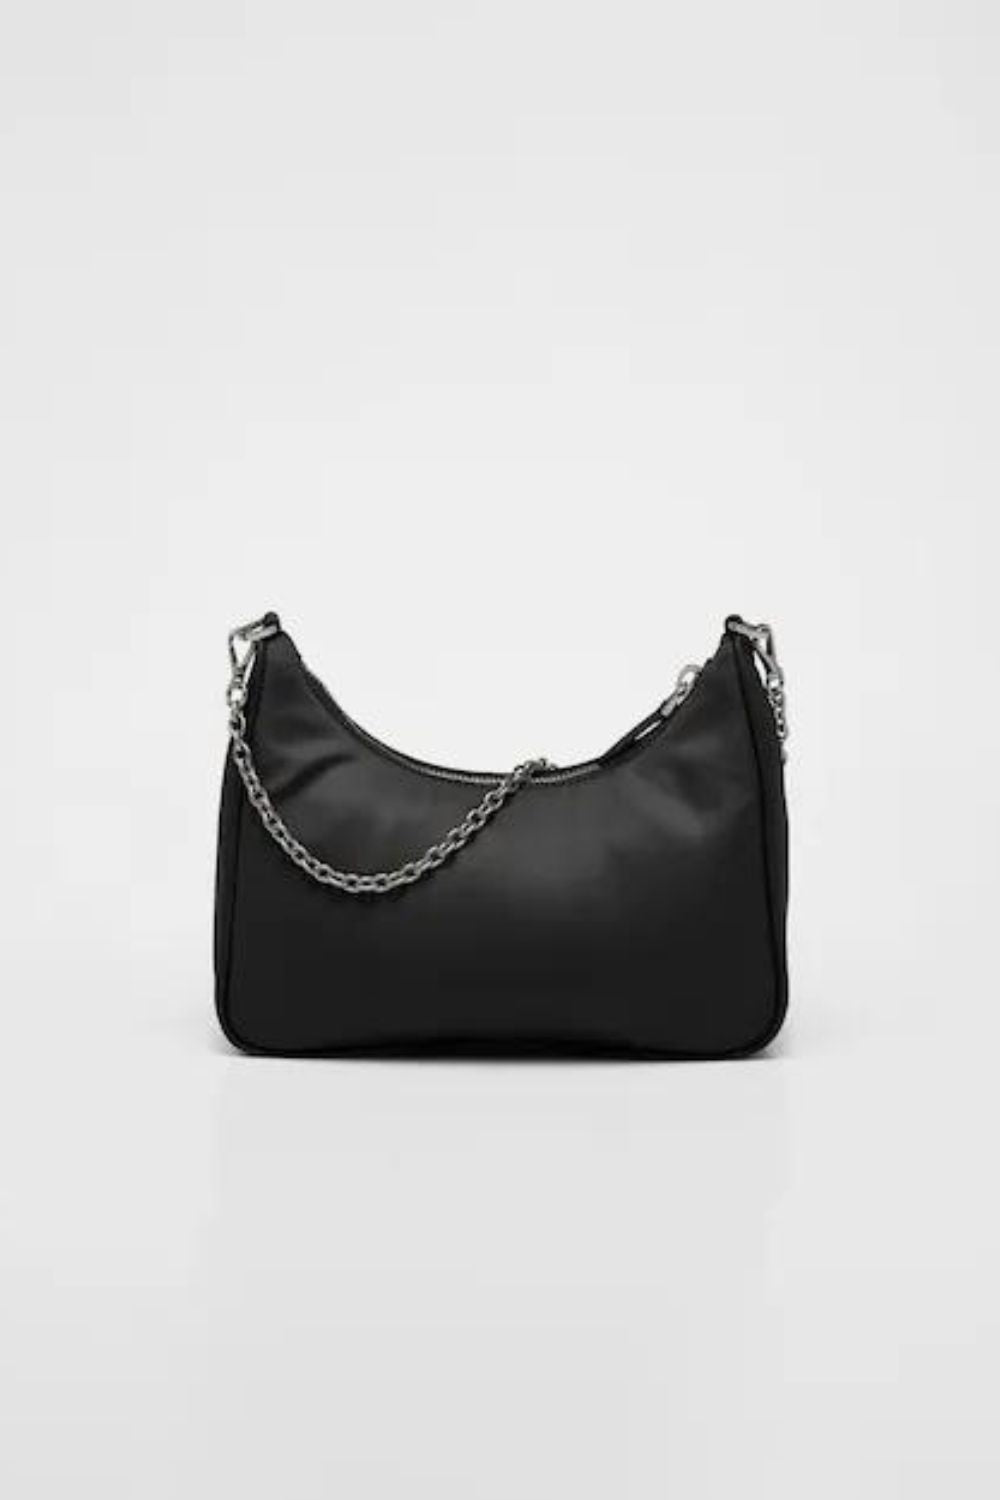 Prada | Re edition 2005 Shoulder Bag | Black